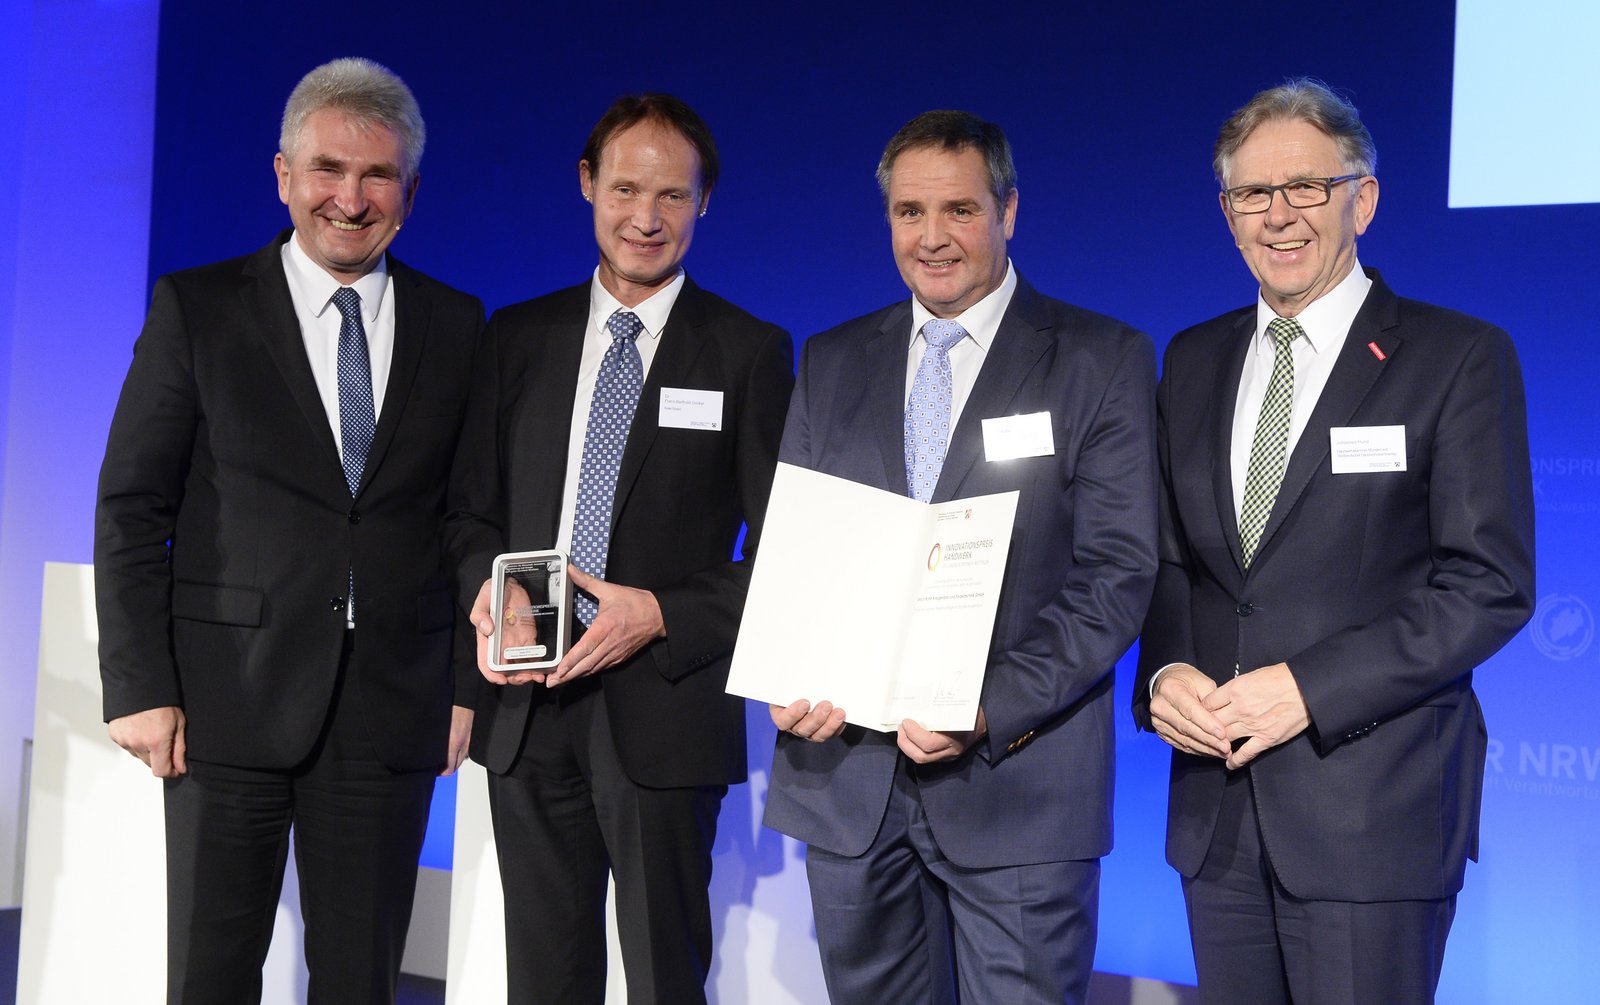 Innovation Award 2019 Minister of Economics Pinkwart with Dr. Franz-Barthold Gockel, Ulrich Rotte